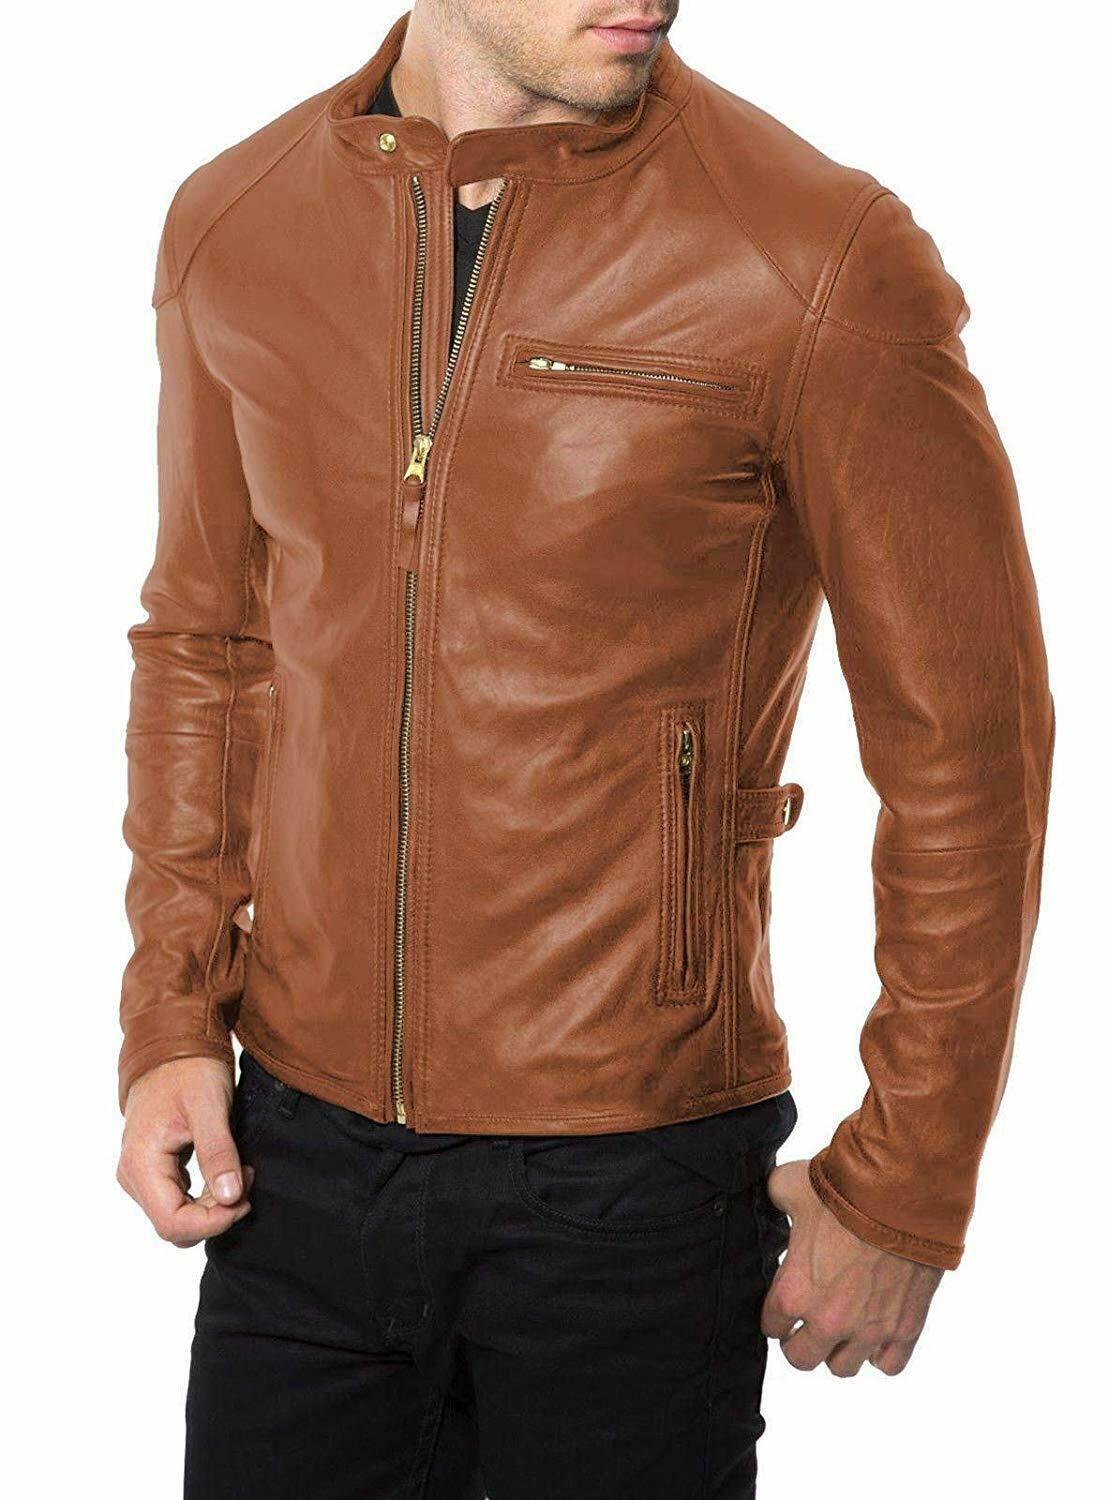 Boy Brown Leather Jacket - RockStar Jacket